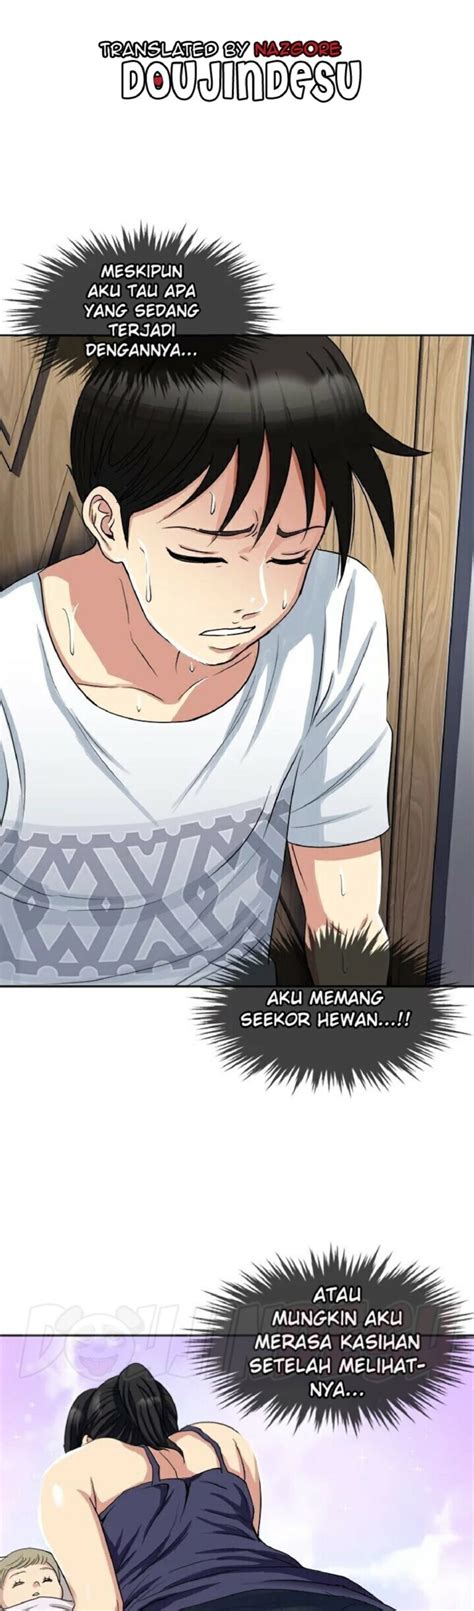 Read the latest manga Kenikmatan Surga Chapter 01 end at <strong>Komik</strong> Dewasa. . Komik gentai